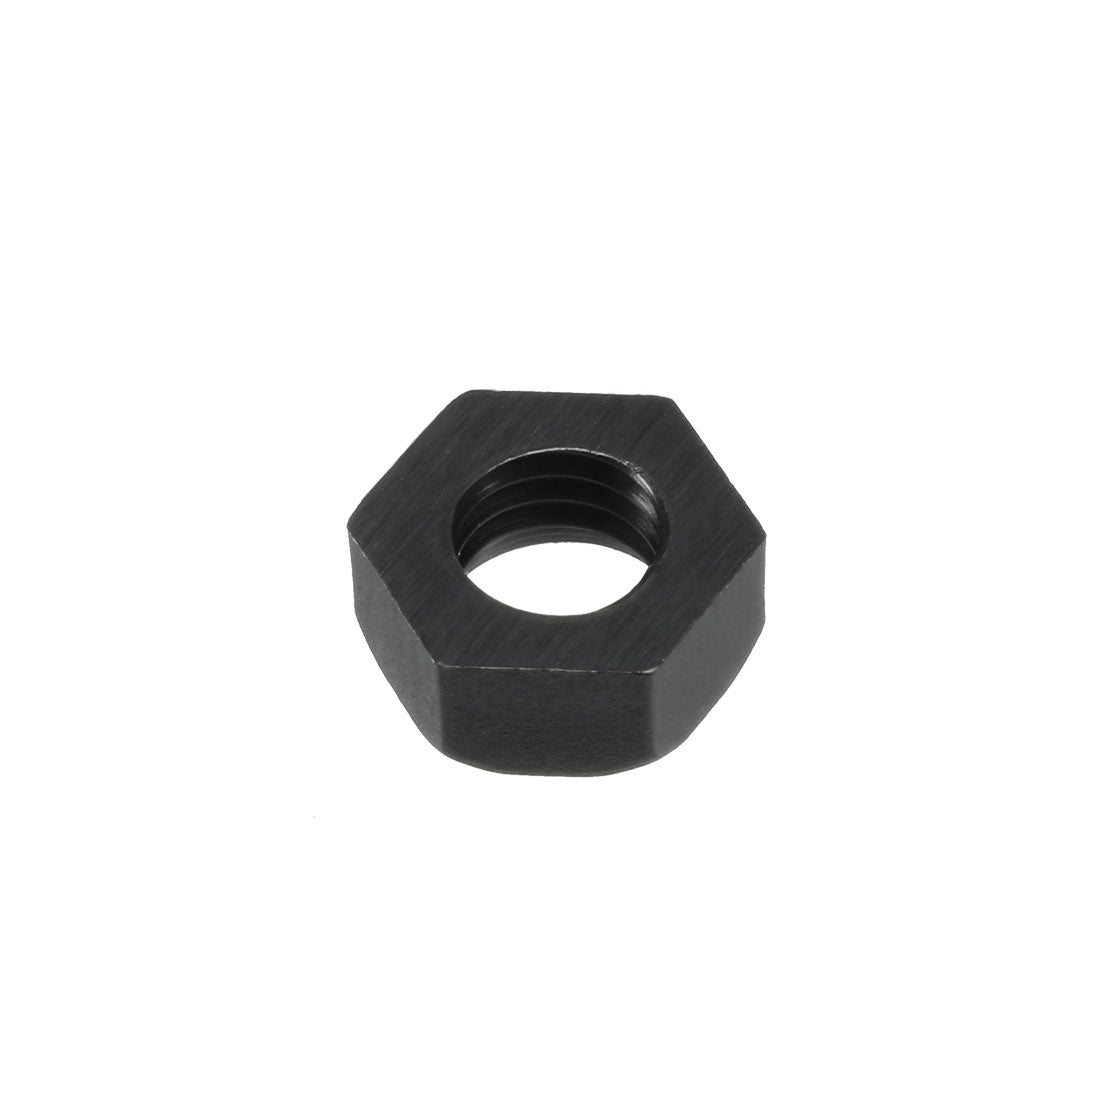 uxcell Uxcell Hex Nut, Metric Nylon M5x0.8mm Thread Hexagon Nuts Black 100pcs